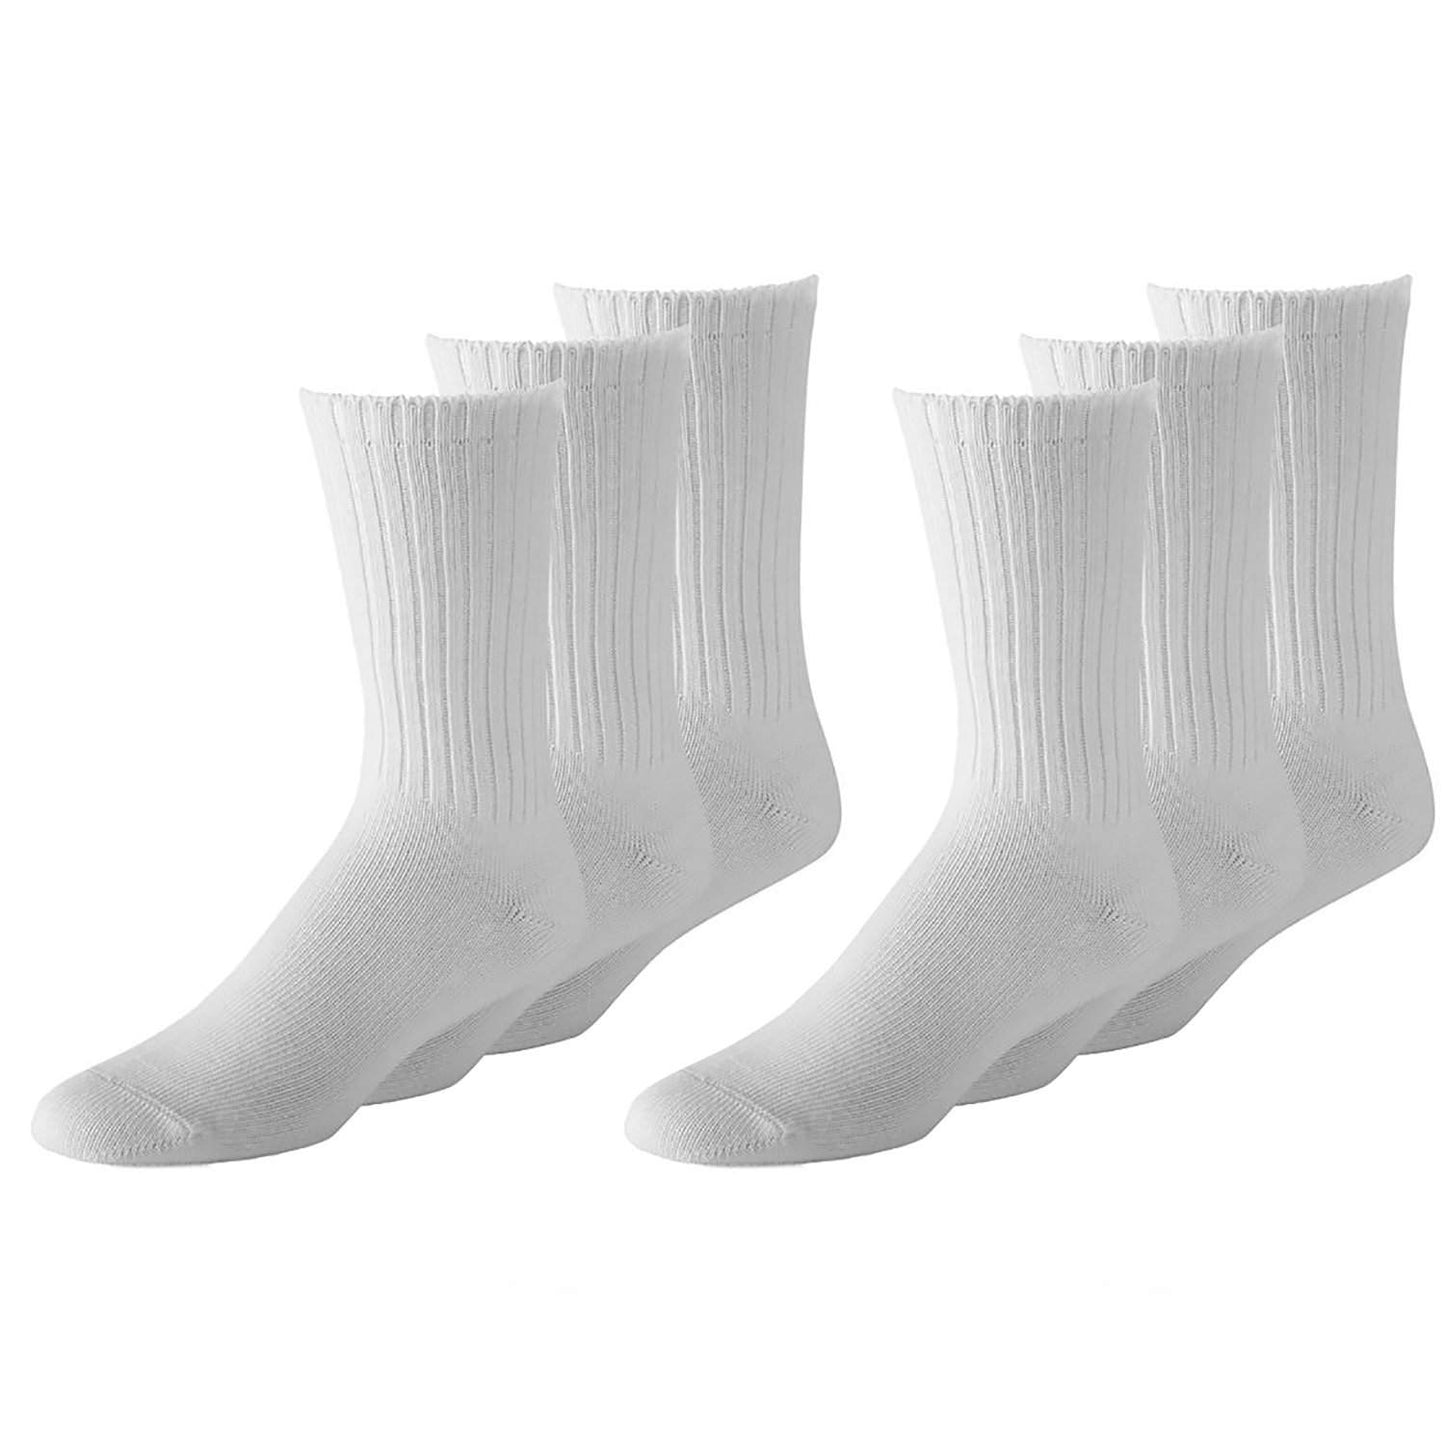 150 Pairs Men's Athletic Crew Socks - Bulk Wholesale Packs - Any Shoe Size